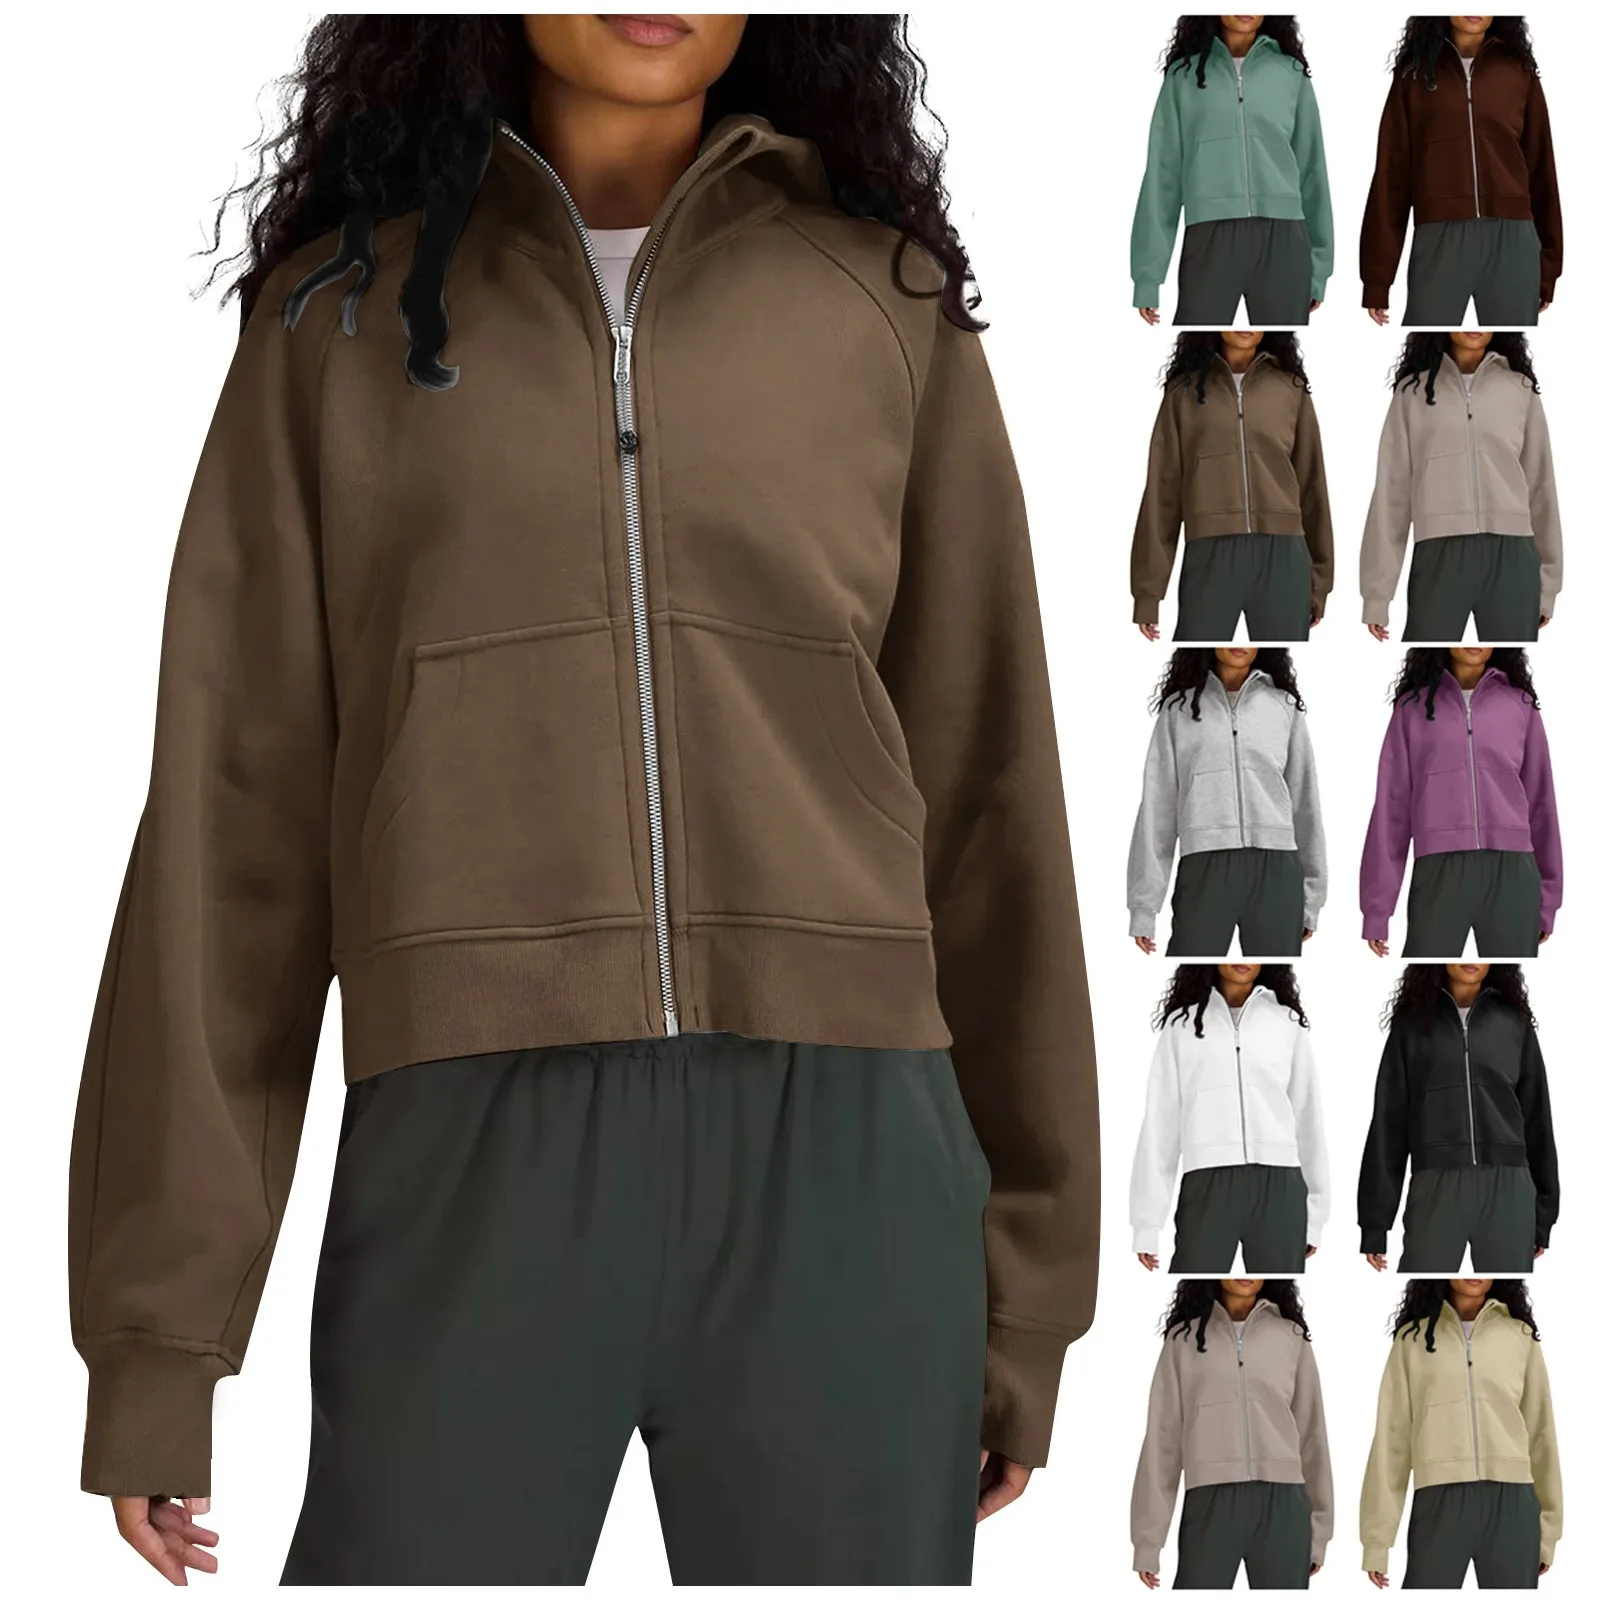 Women ' S Zip Up Hoodies Sweatshirts Clothes Teen Girl Casual Jackets Pockets With Roupas Femininas яке дамско палто дамско . ' - ' . 5